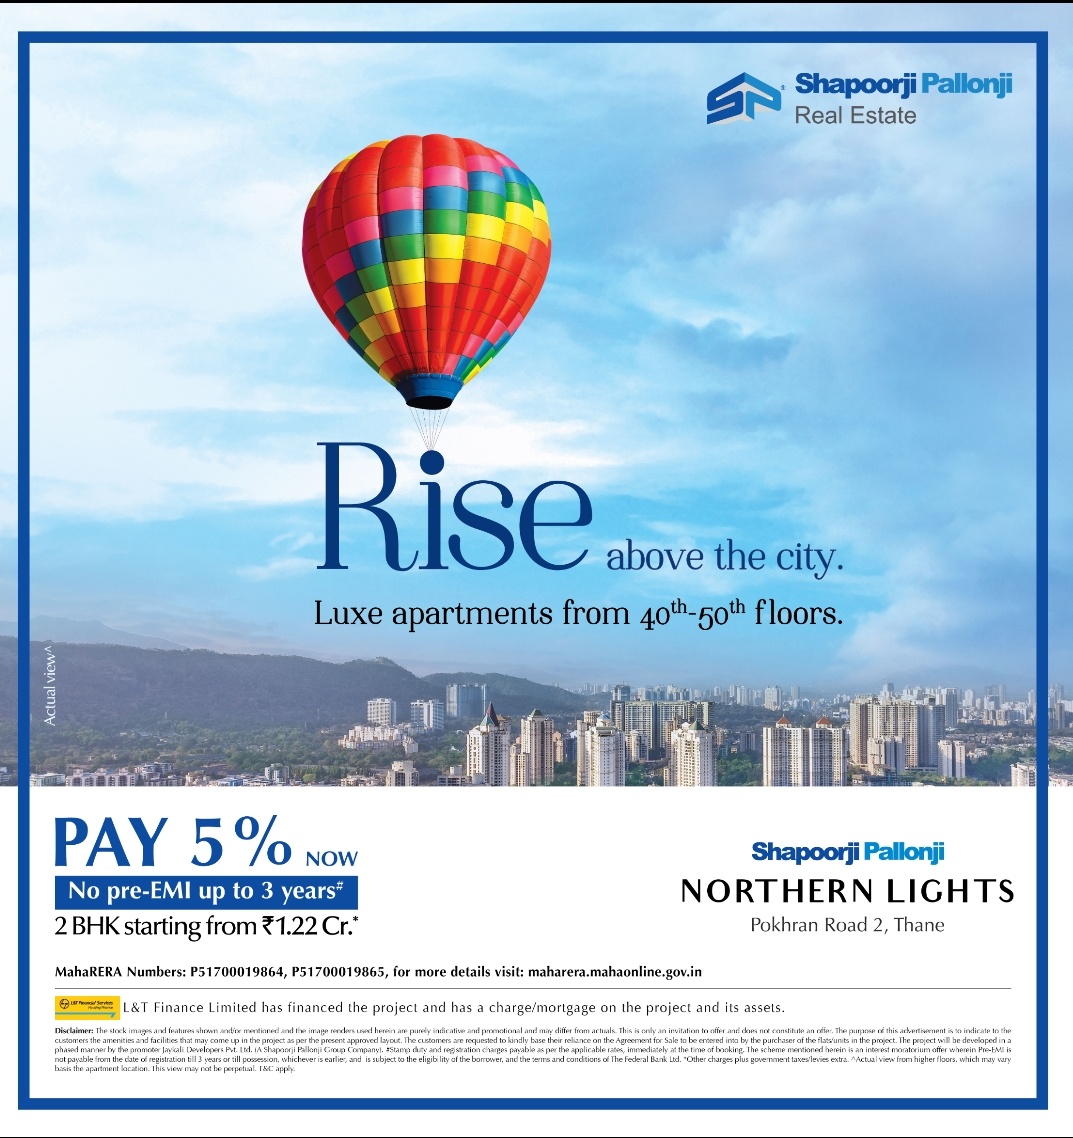 Pay 5 % now no pre EMI up to 3 years at Shapoorji Pallonji Northern Lights, Mumbai Update